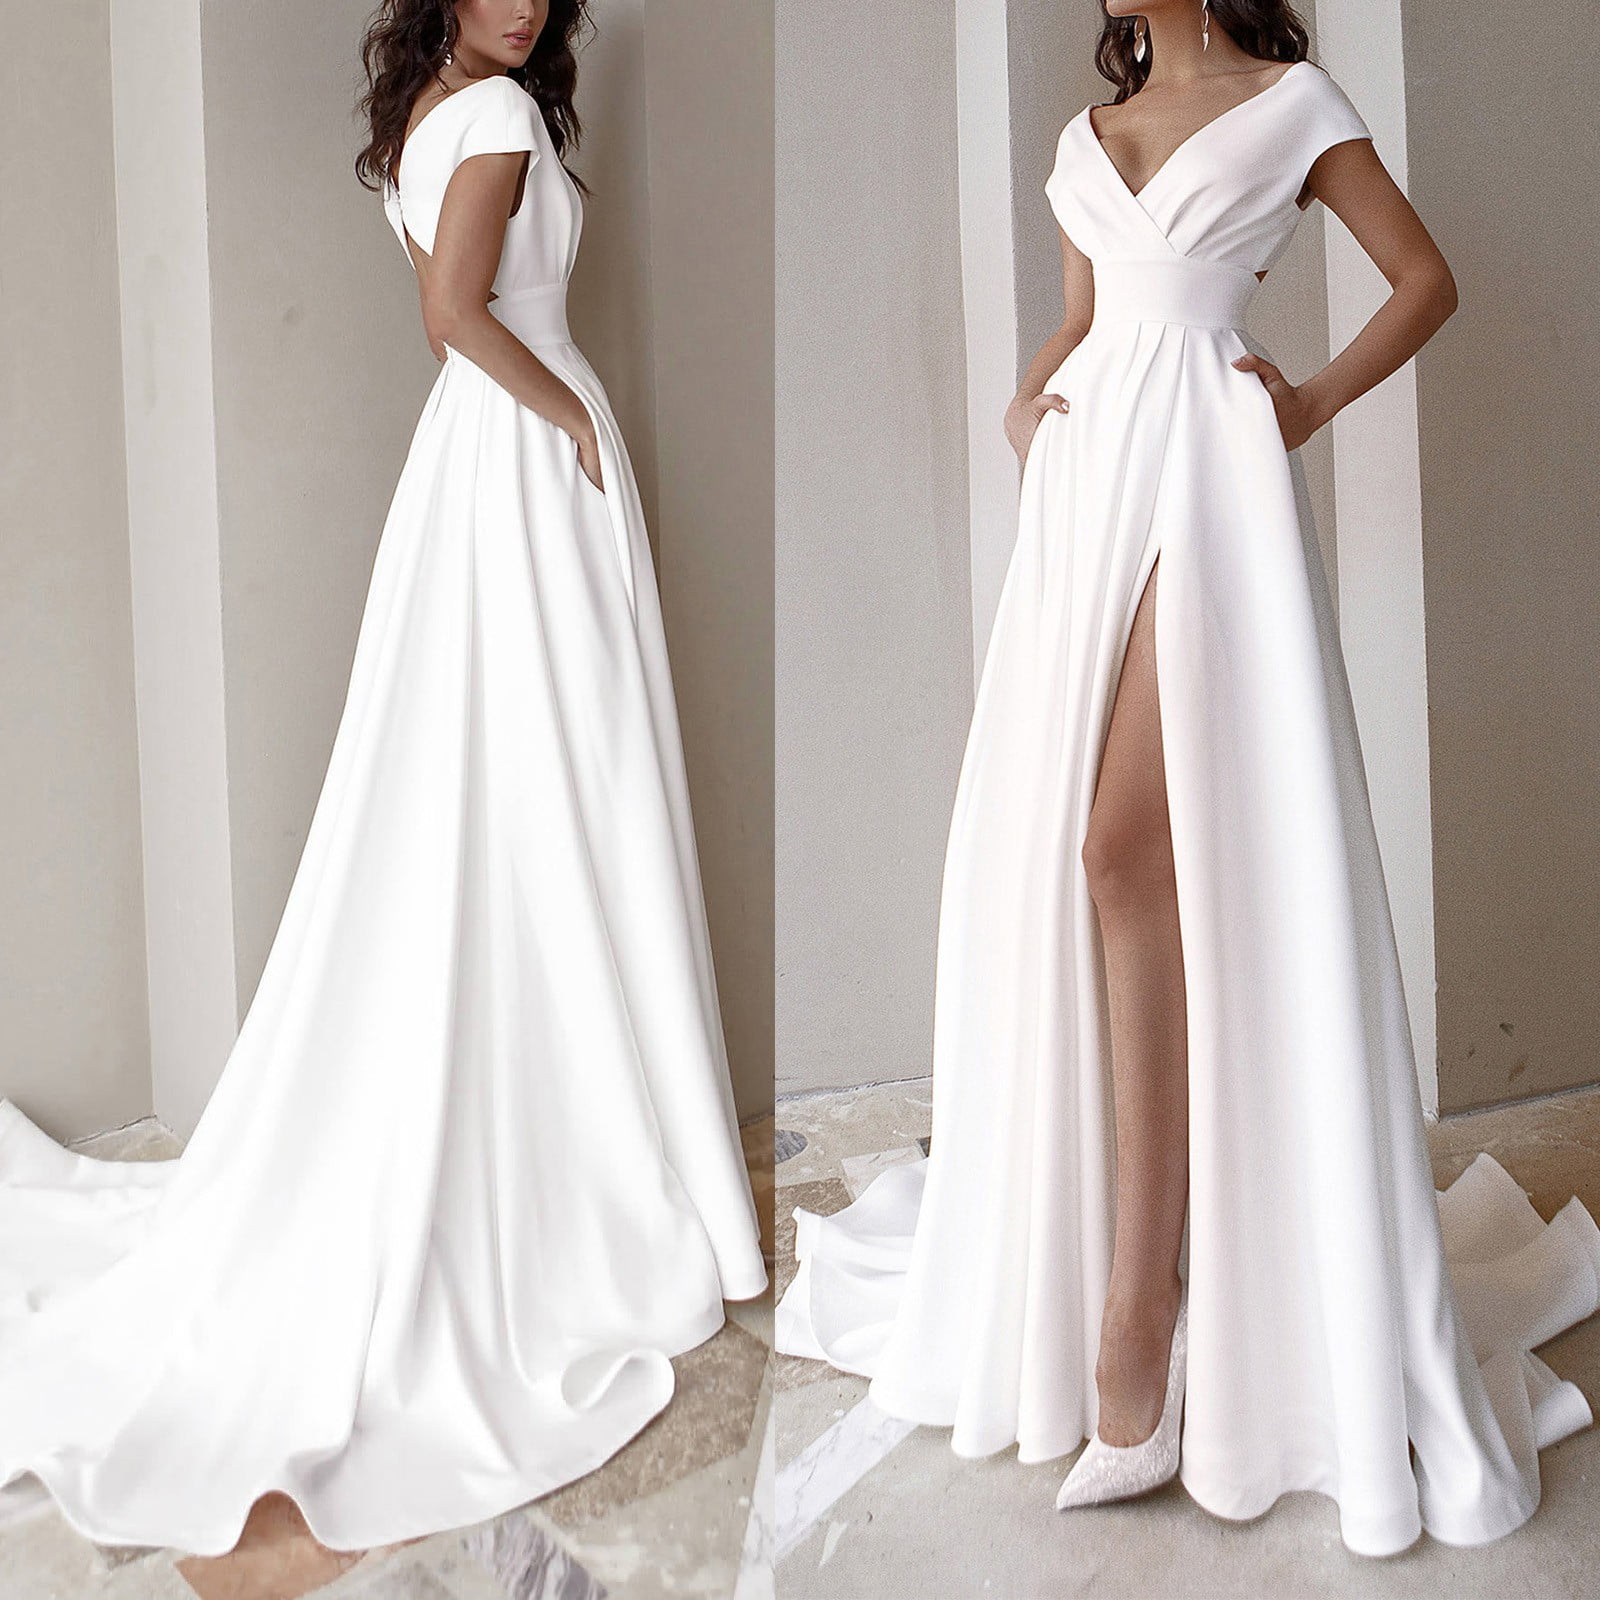 white evening dress